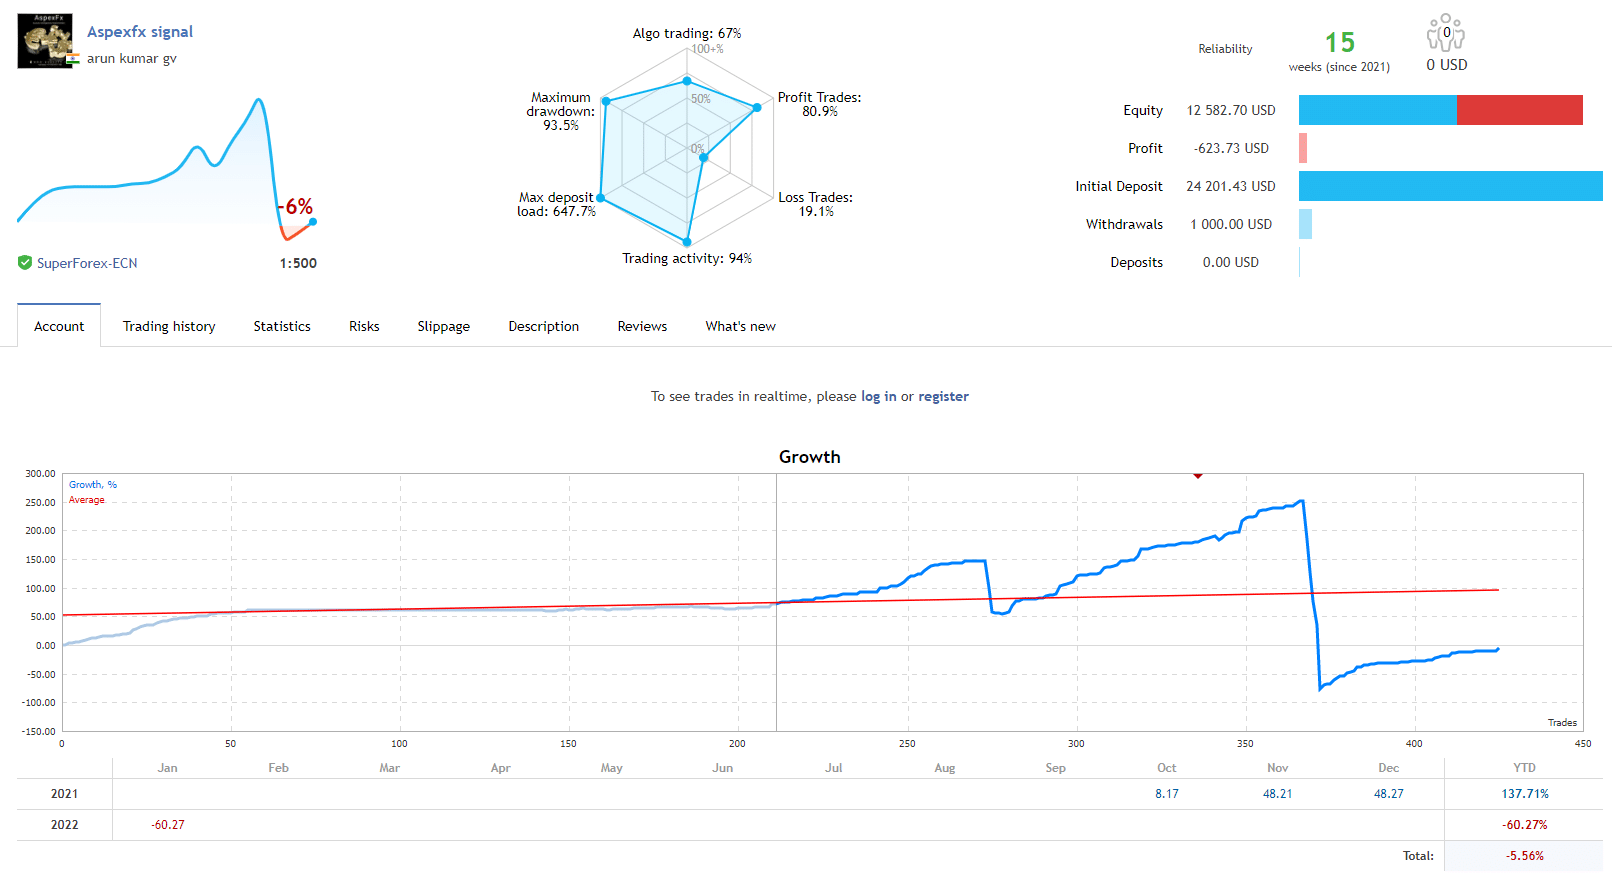 Growth chart for Aspex EA on MQL5.